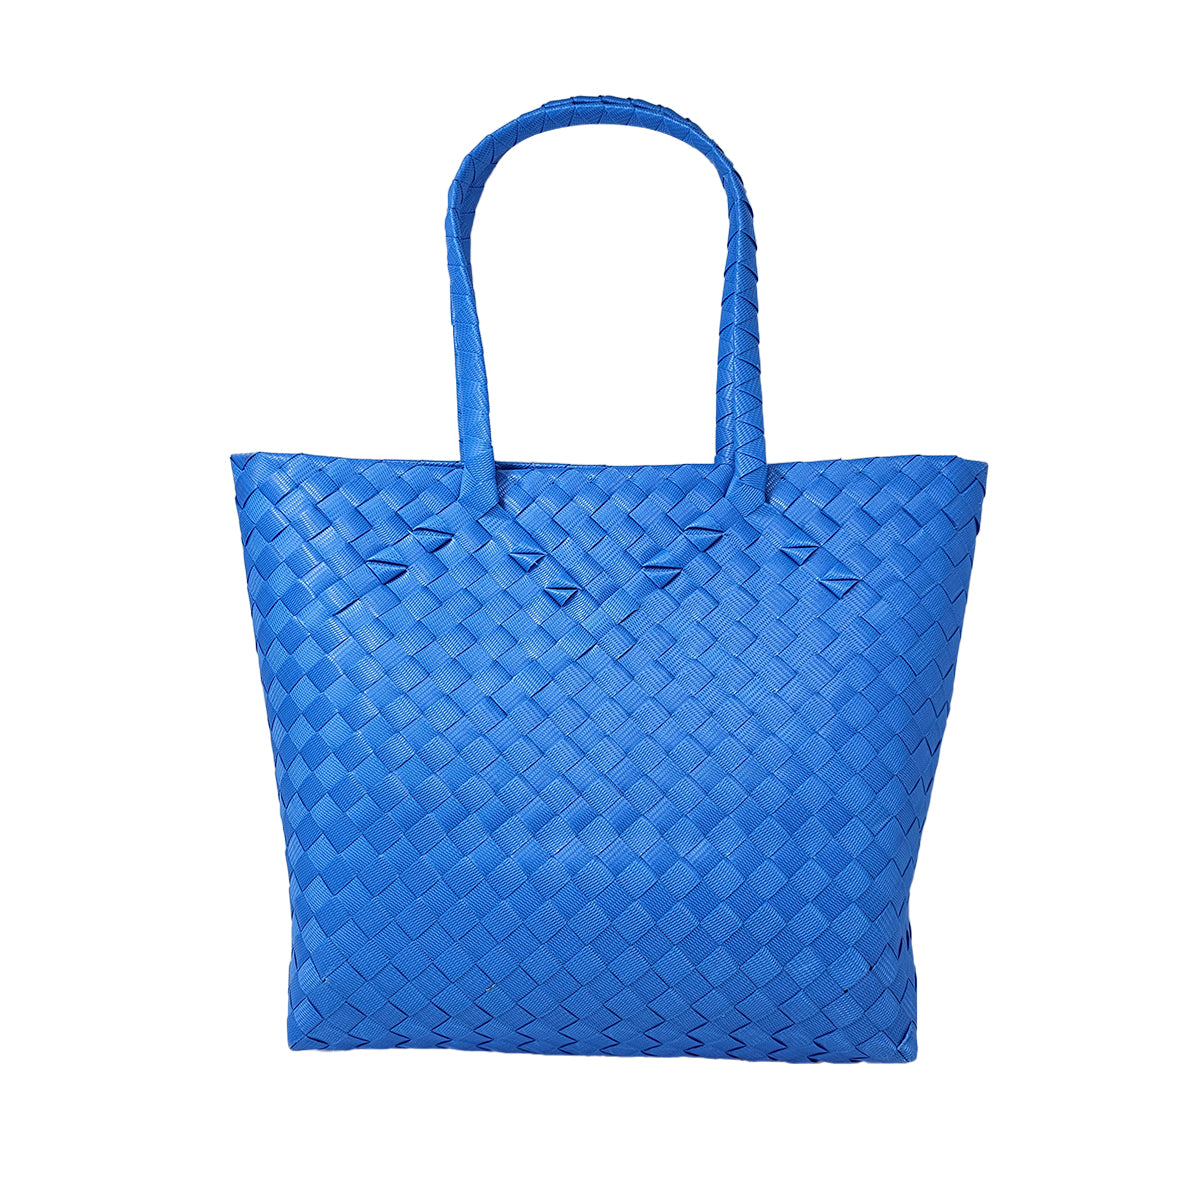 Misenka Handicrafts Philippine Bayong Azure Blue Go with Zipper Bag